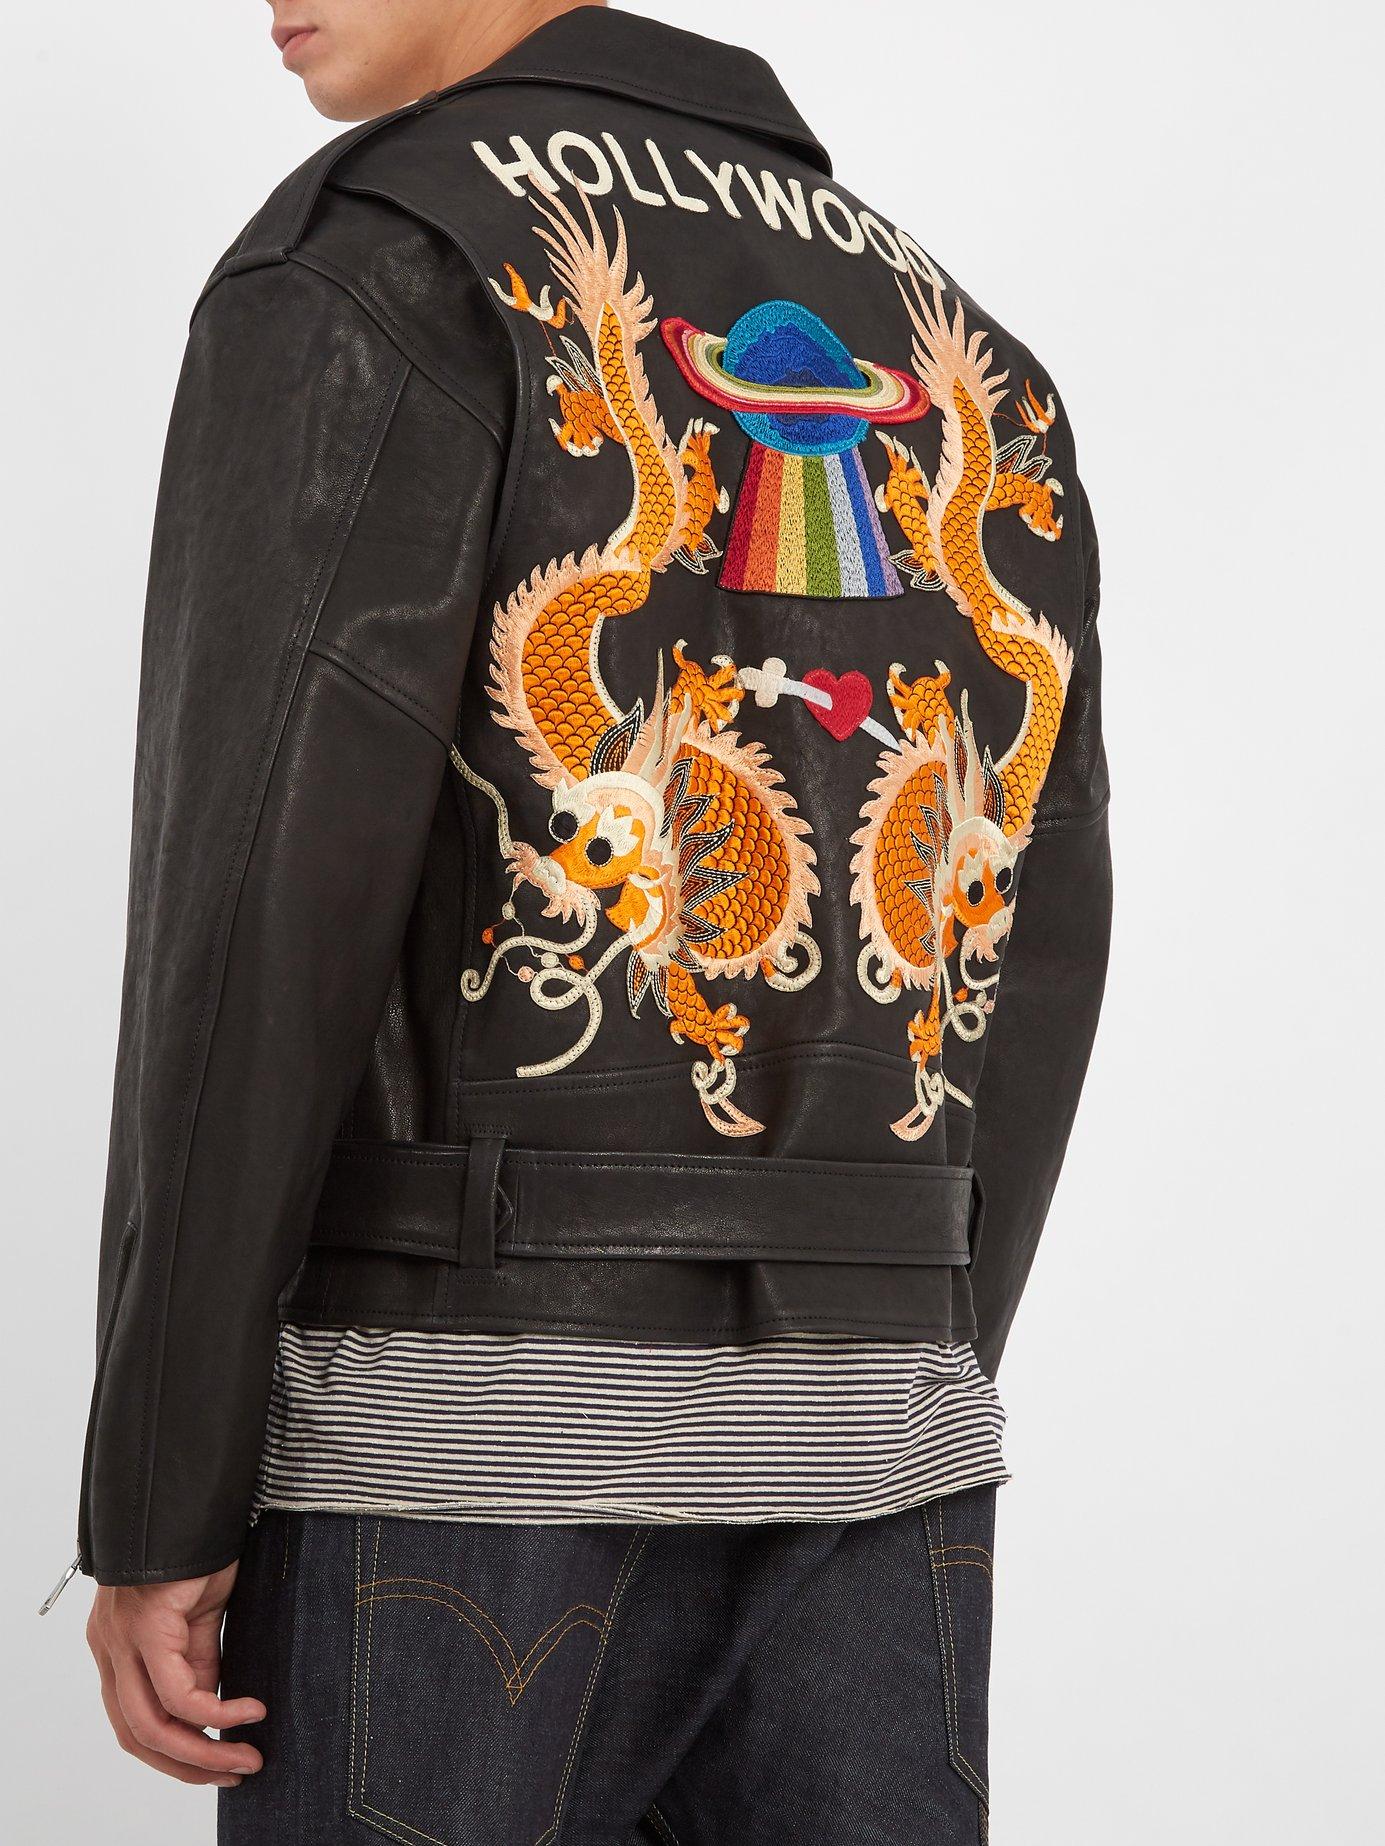 Gucci Dragon Appliqué Leather Jacket in Black for Men | Lyst